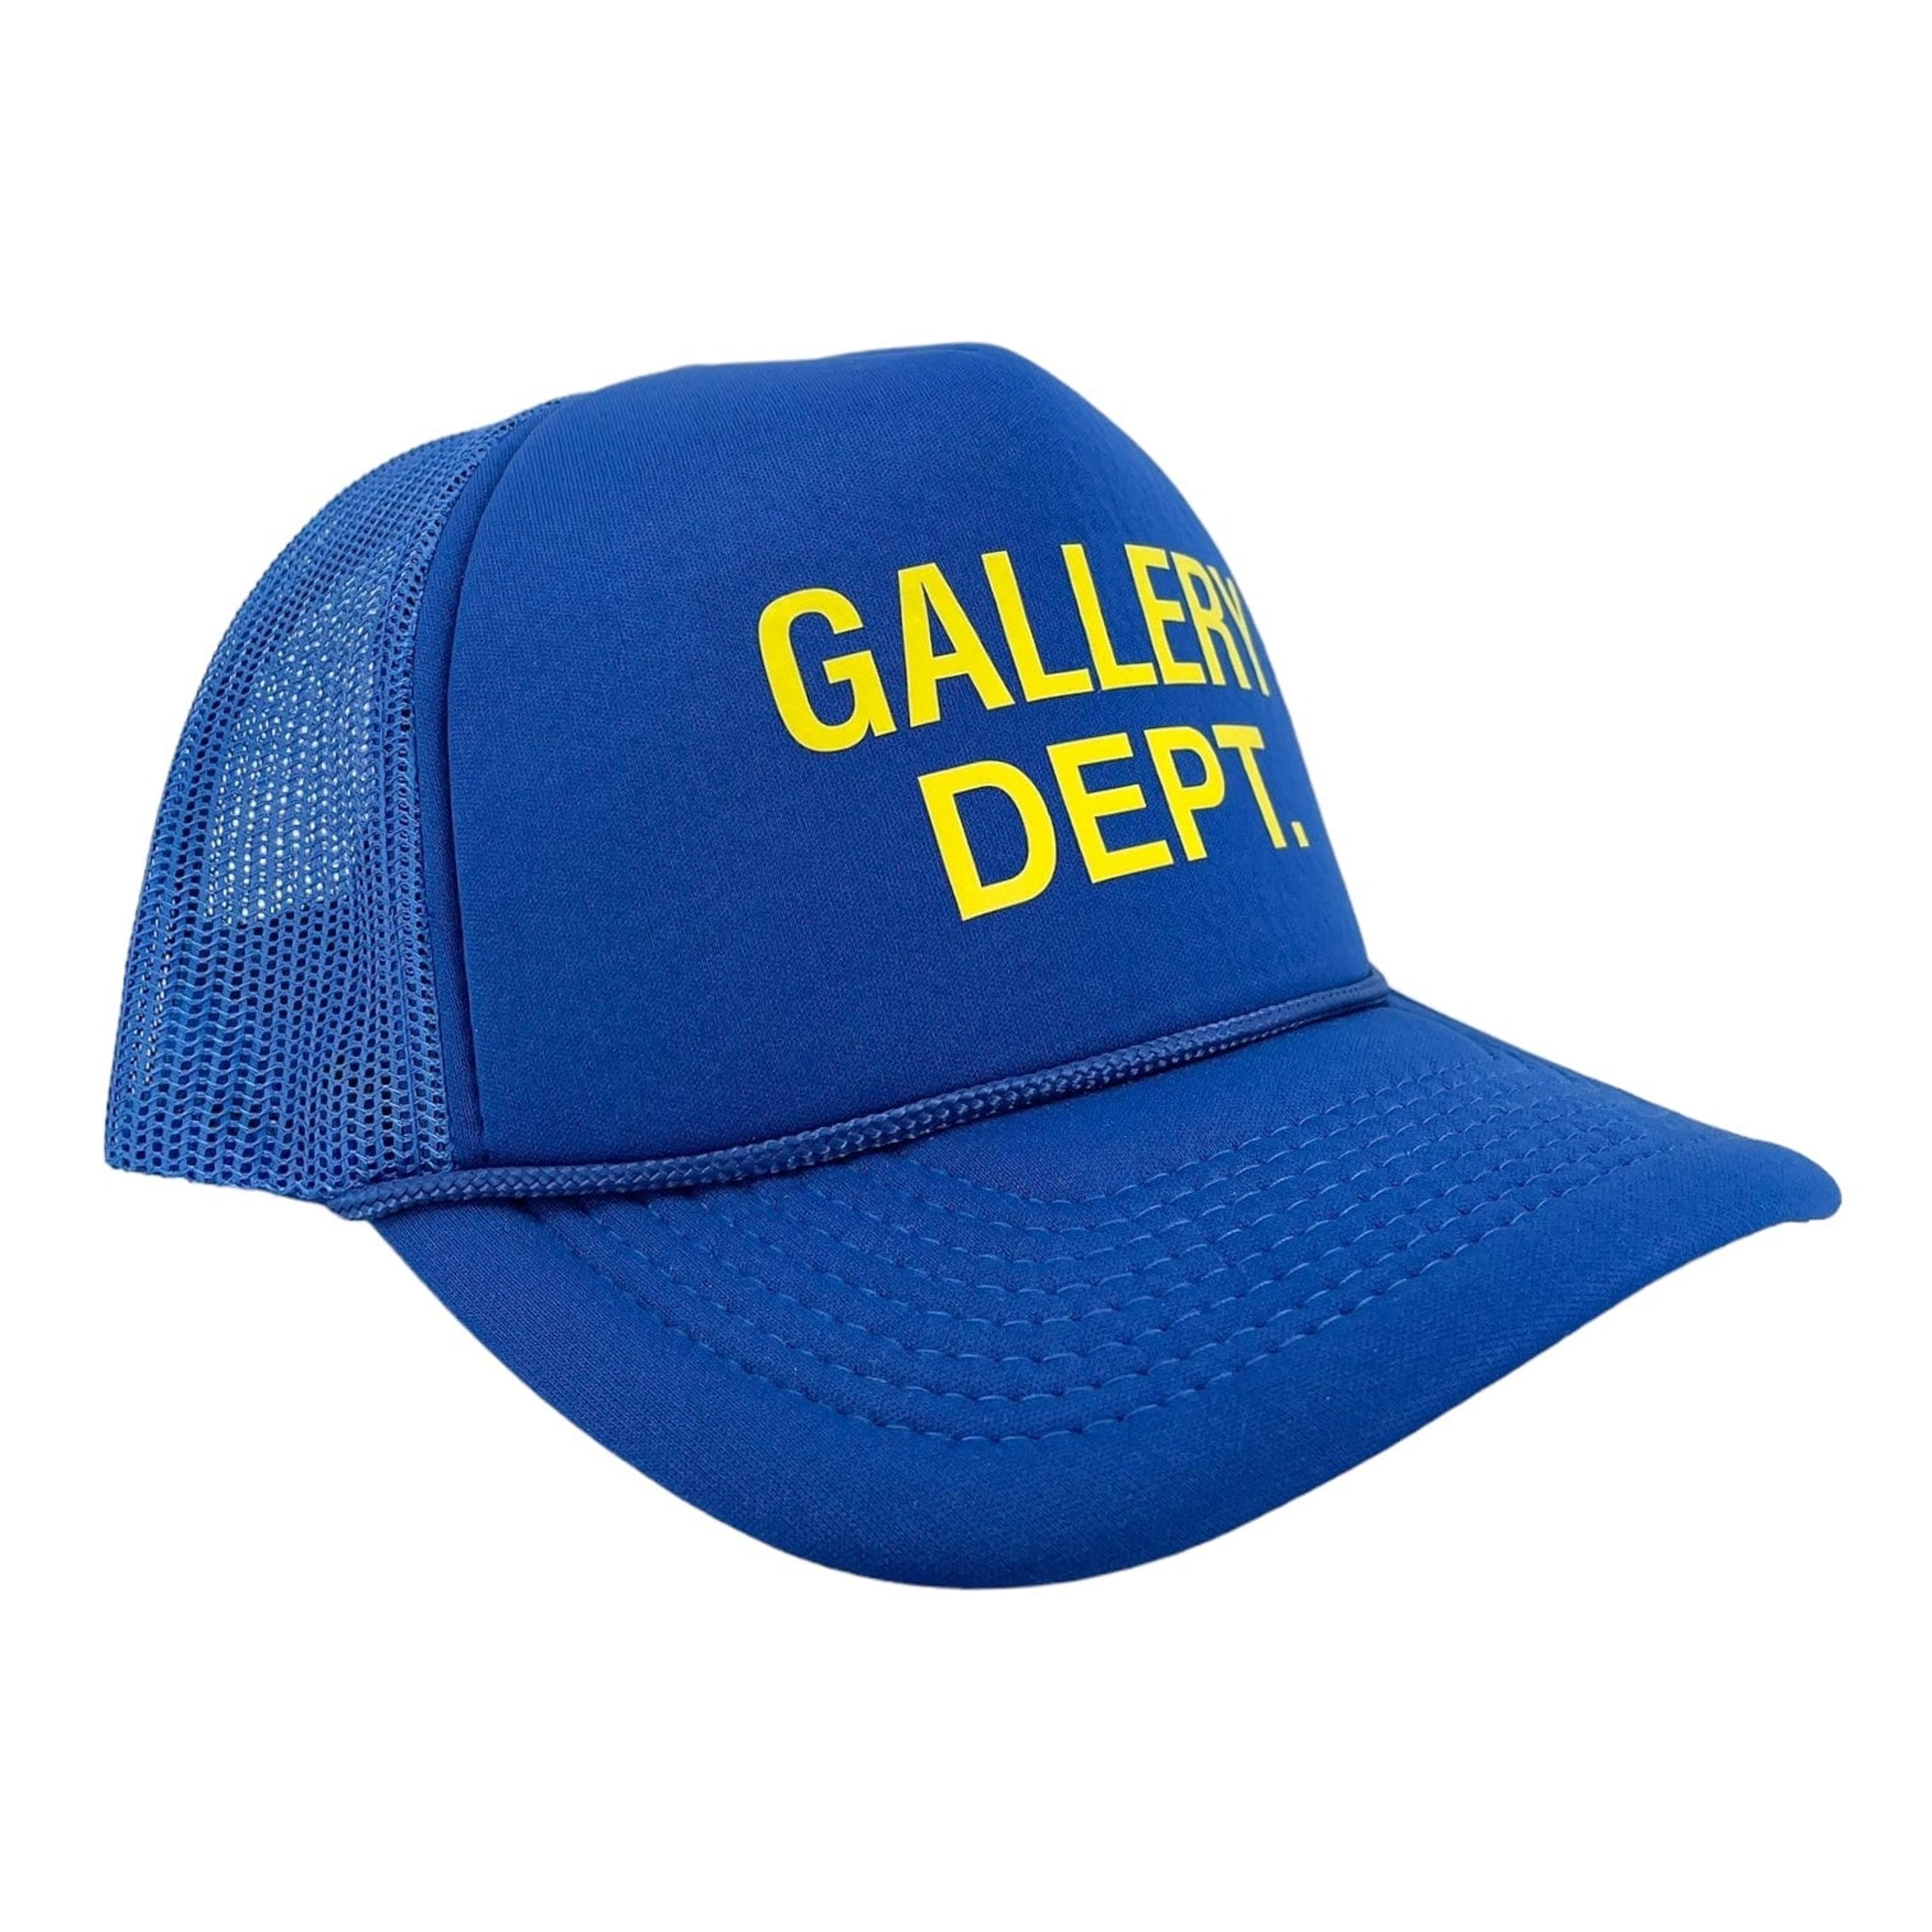 Alternate View 1 of Gallery Department Logo Trucker Hat Blue Yellow